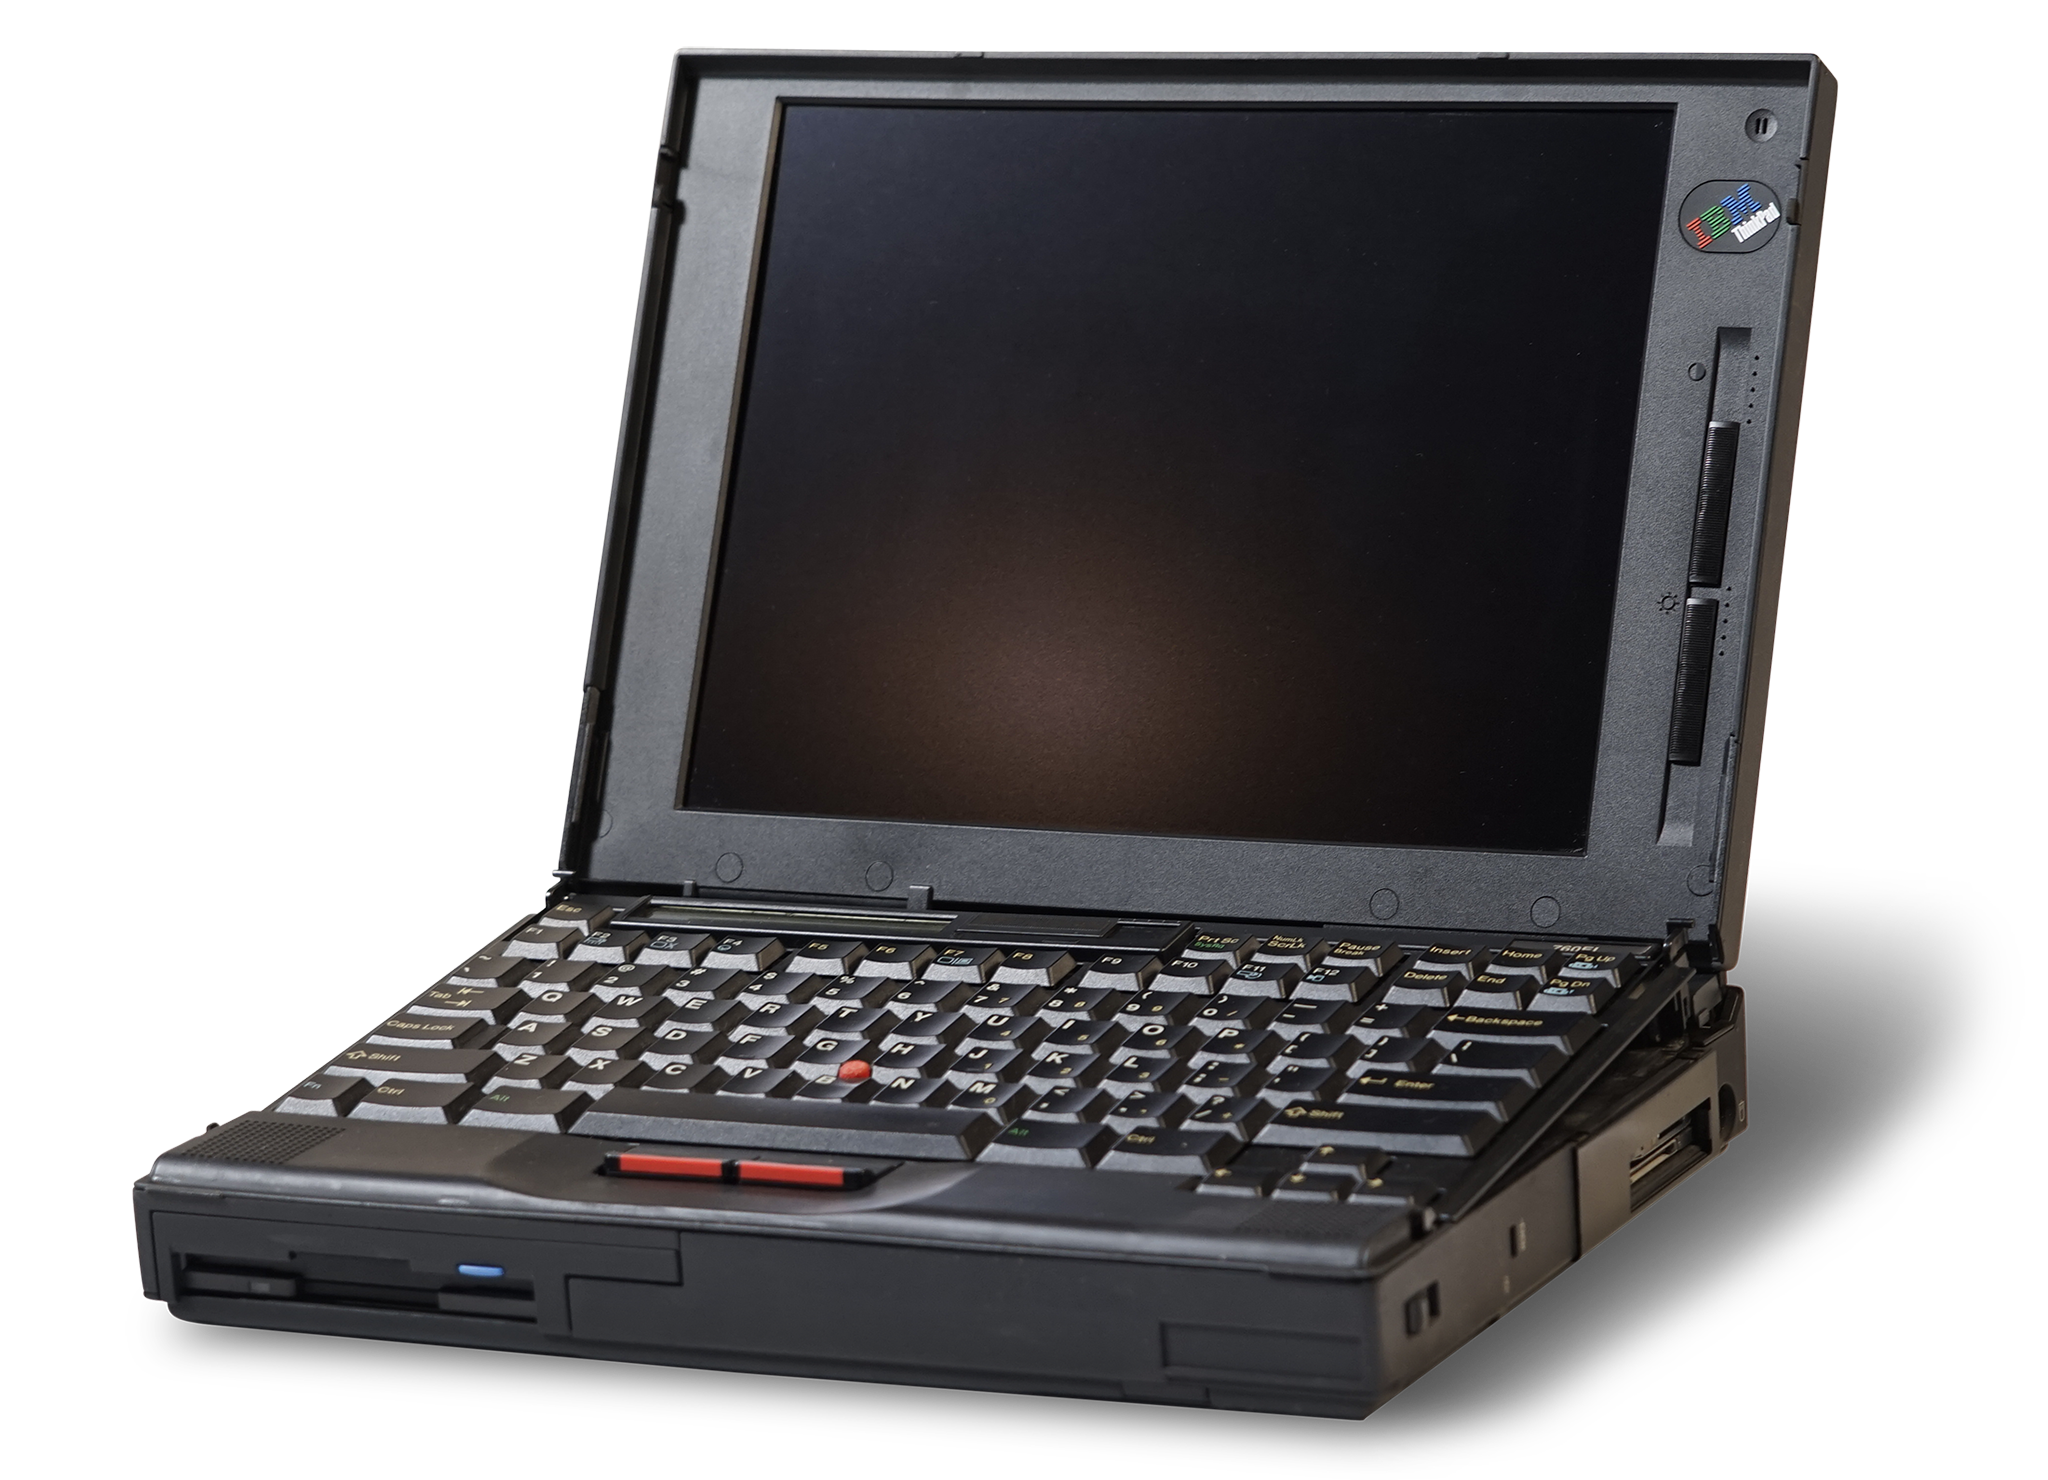 IBM ThinkPad laptop